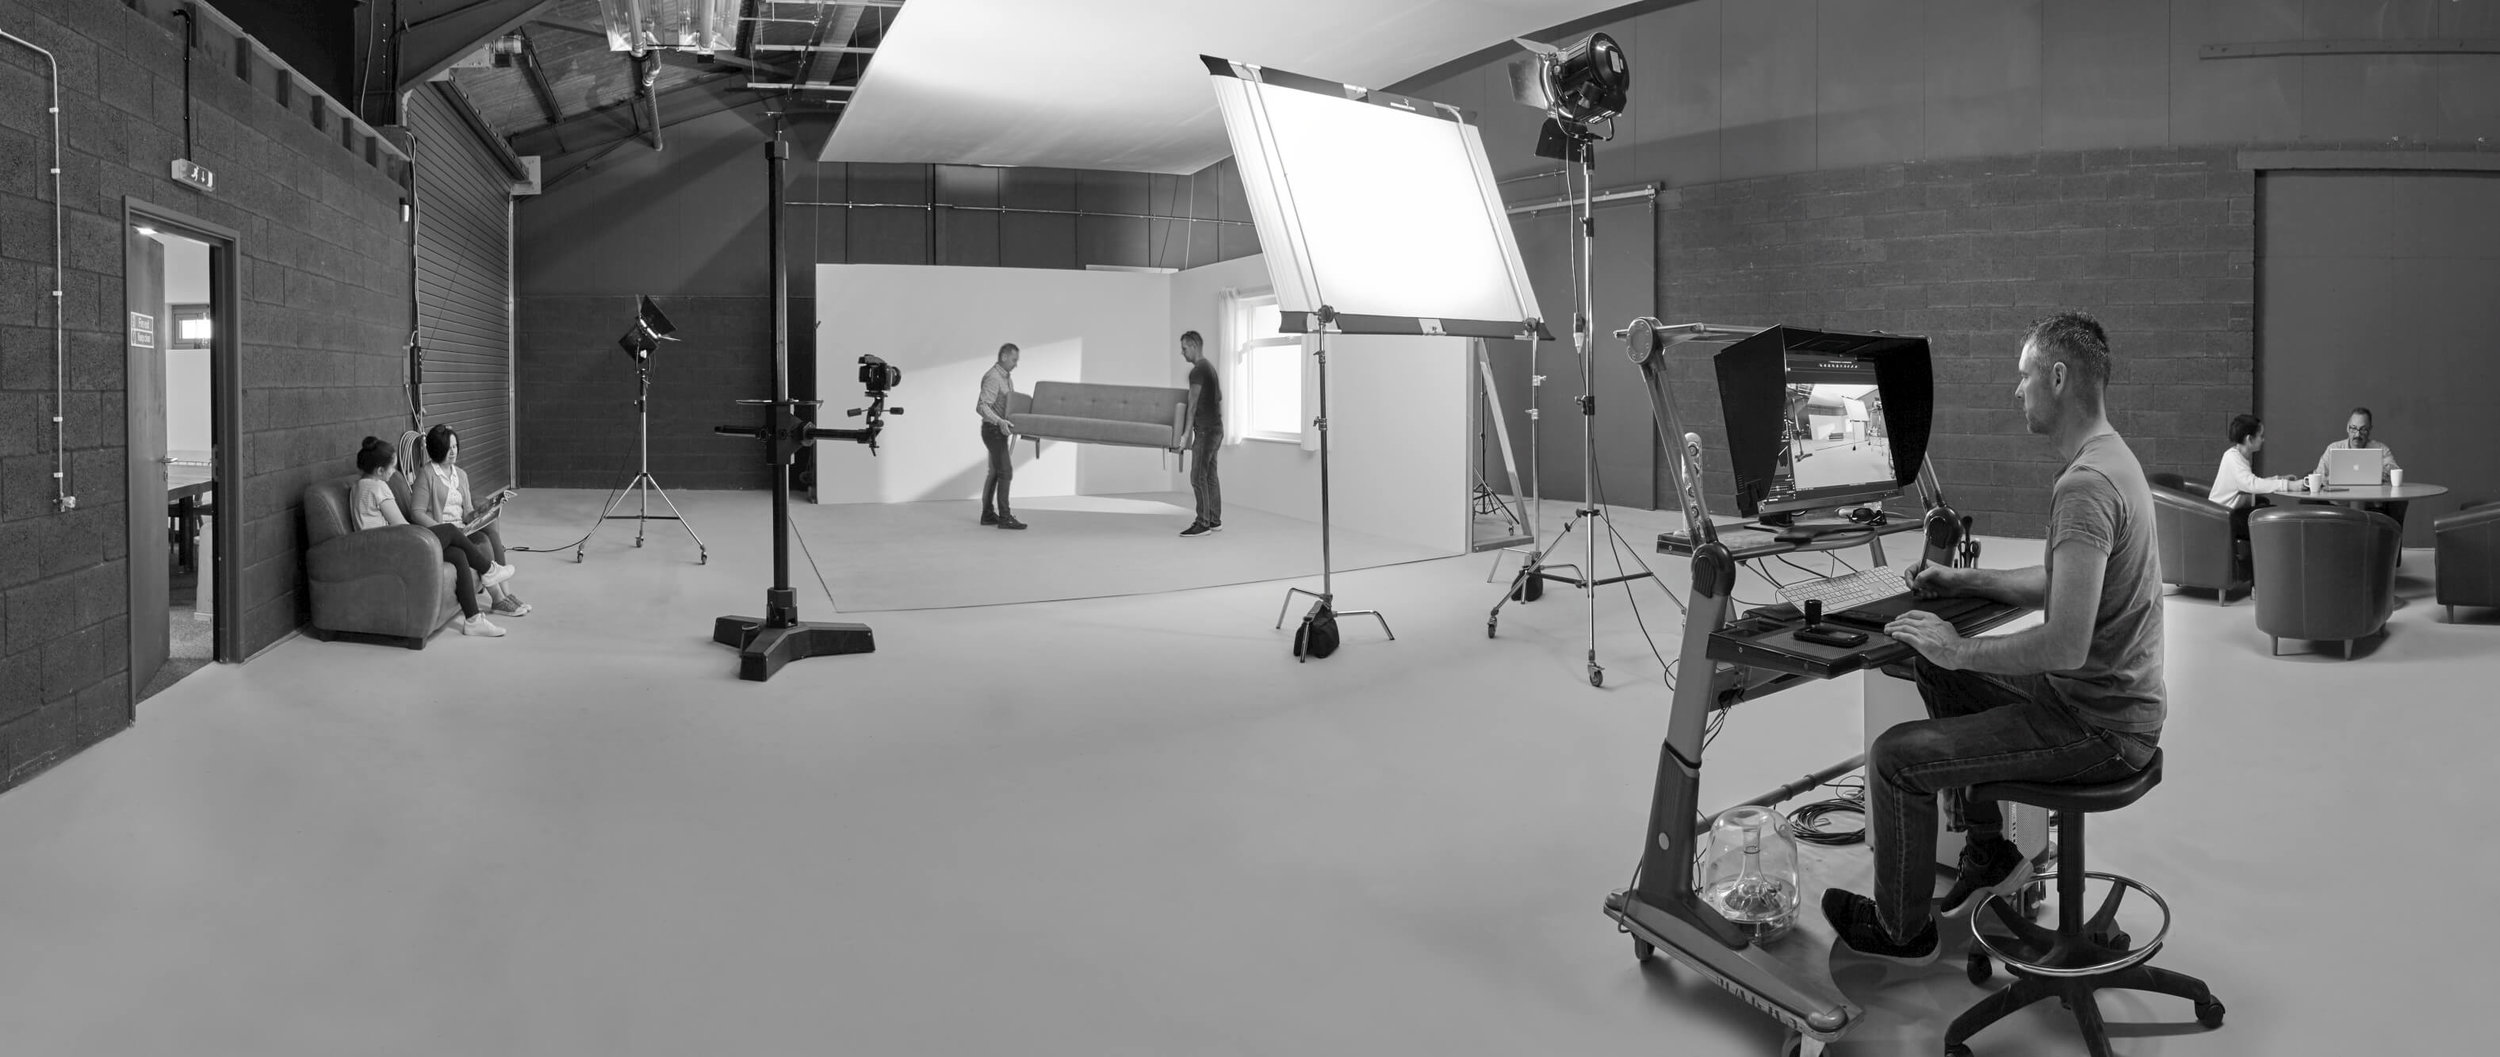 Studio-2-two-moorland-studios-roomsets-photography-setup-hire-space-uk-midlands-man-moving-sofa-on-set.jpg